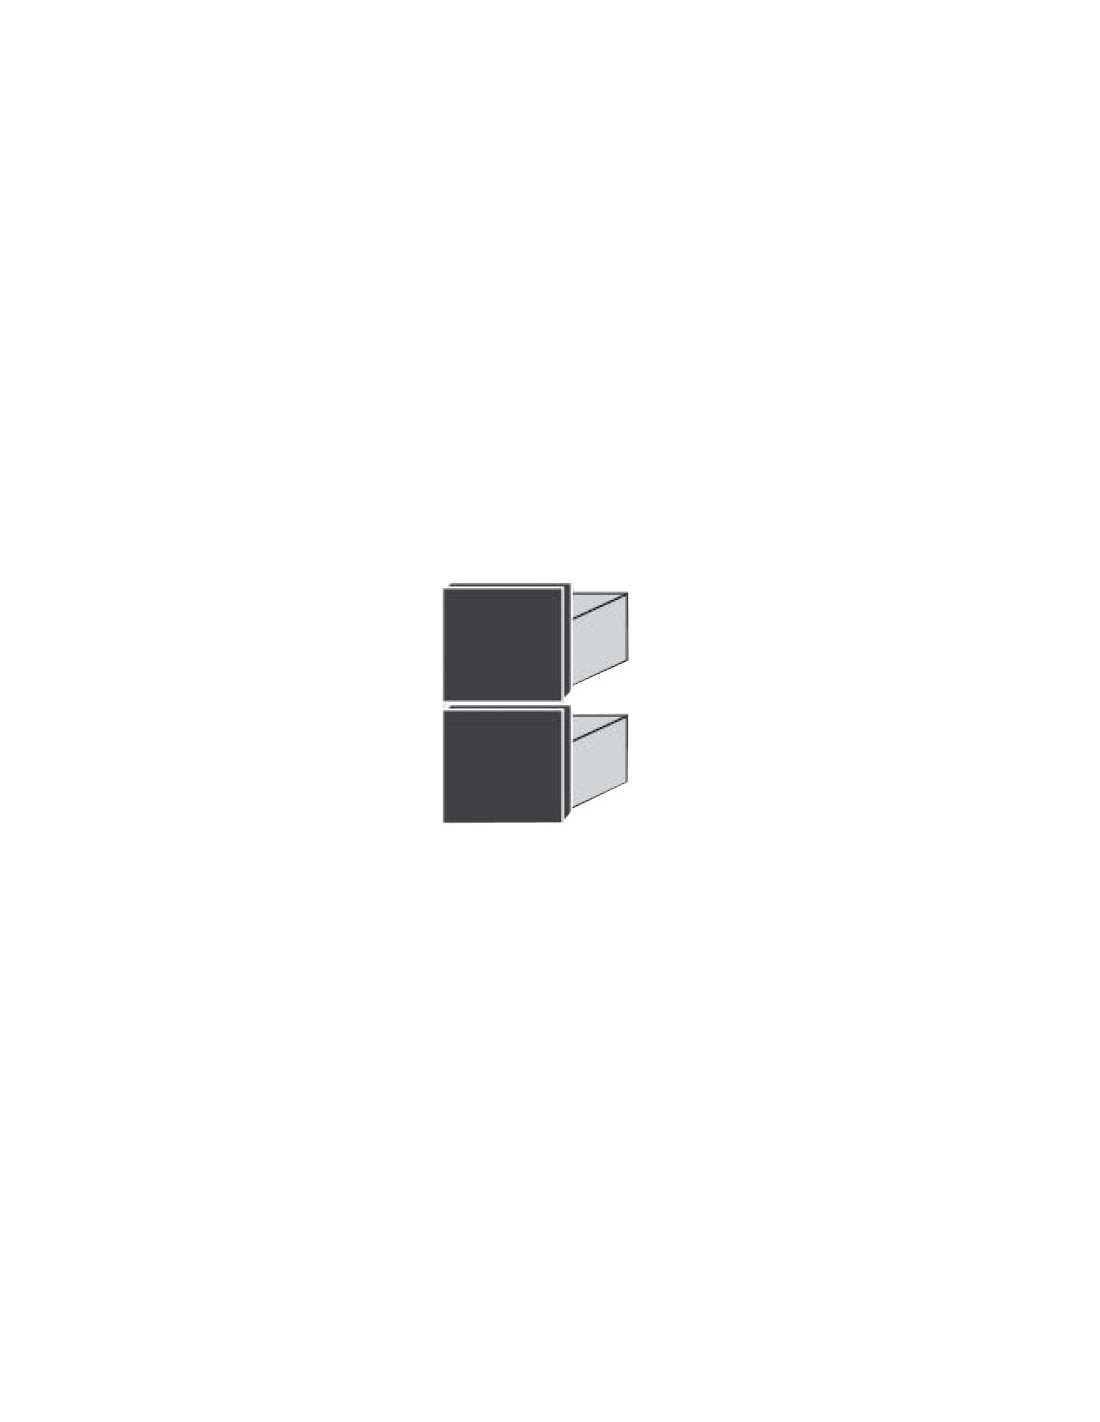 Cassettiera n.2 cassetti refrigerati 1/2 (cm 30.1 x 48.8 x 22 h )